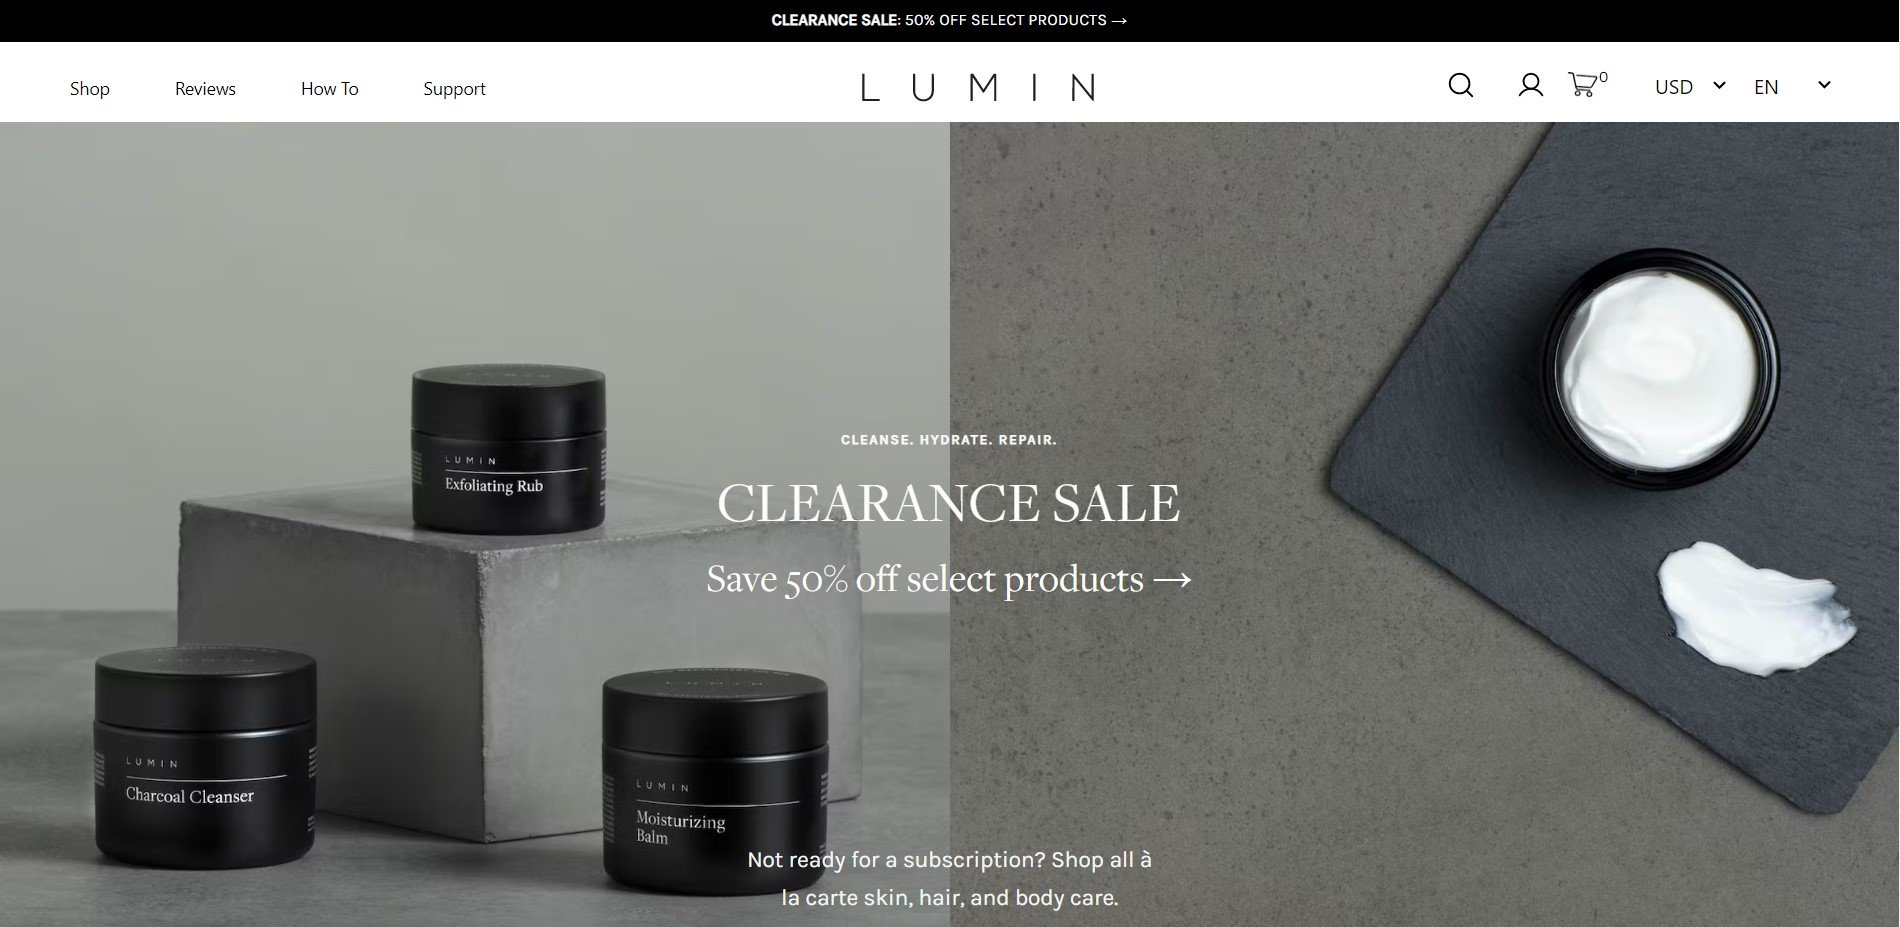 Shopify beauty stores: Lumin
